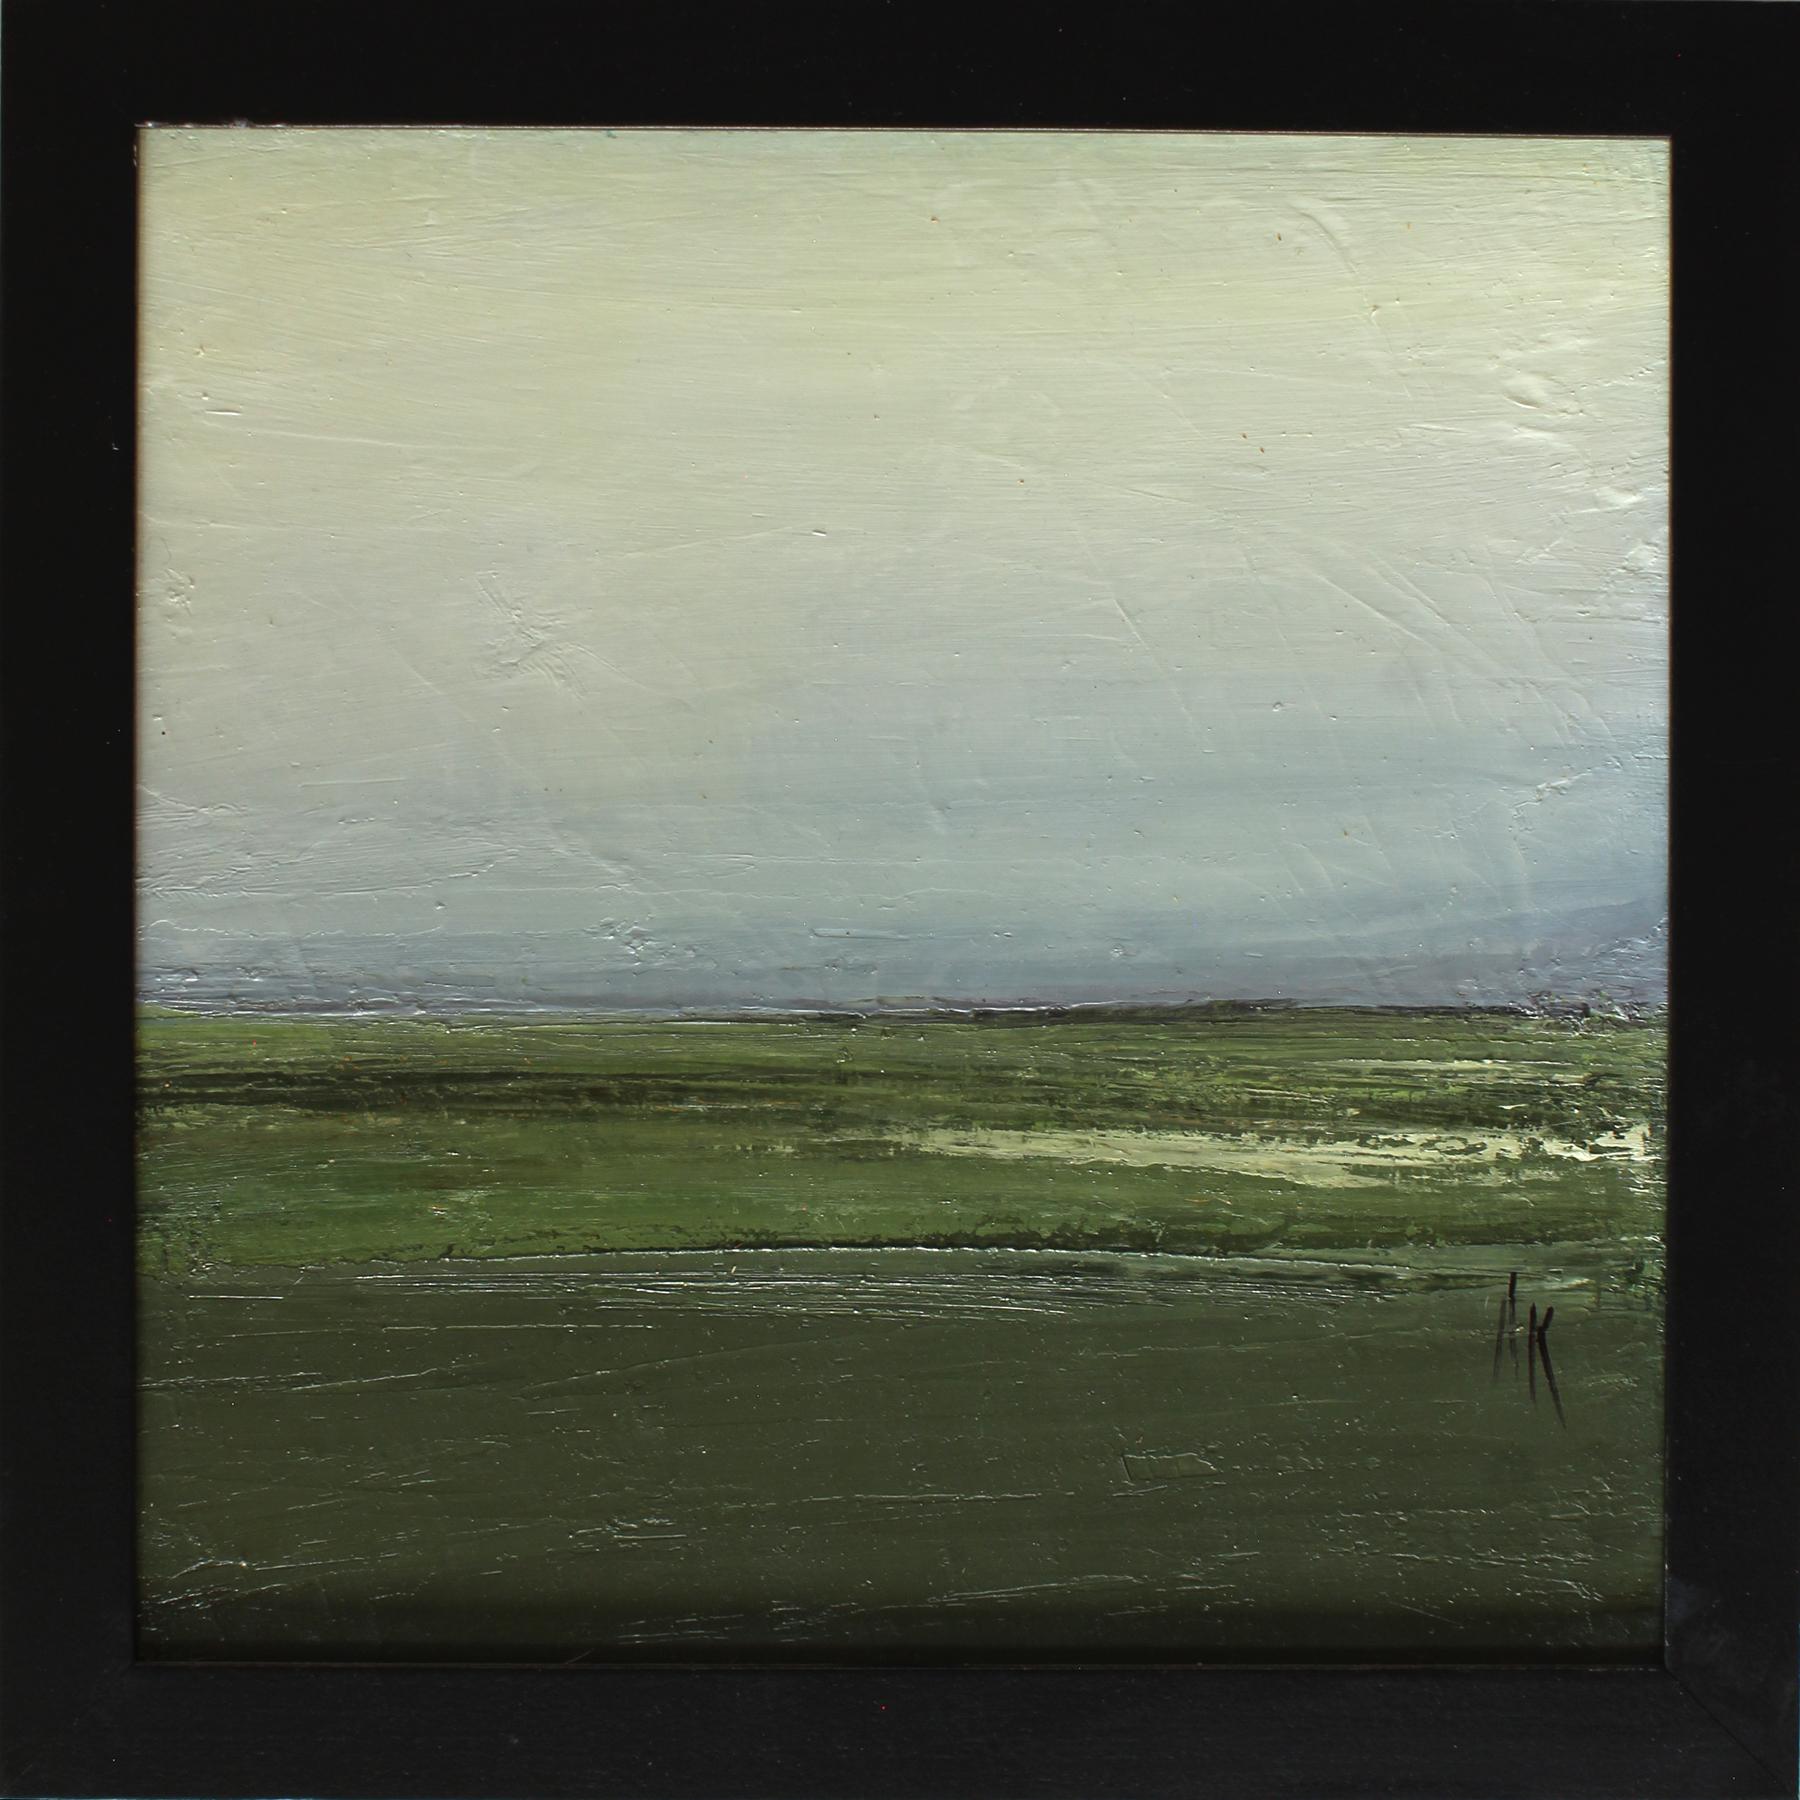 Alyson Kinkade Landscape Painting - Subdue, 10x10" oil on linen